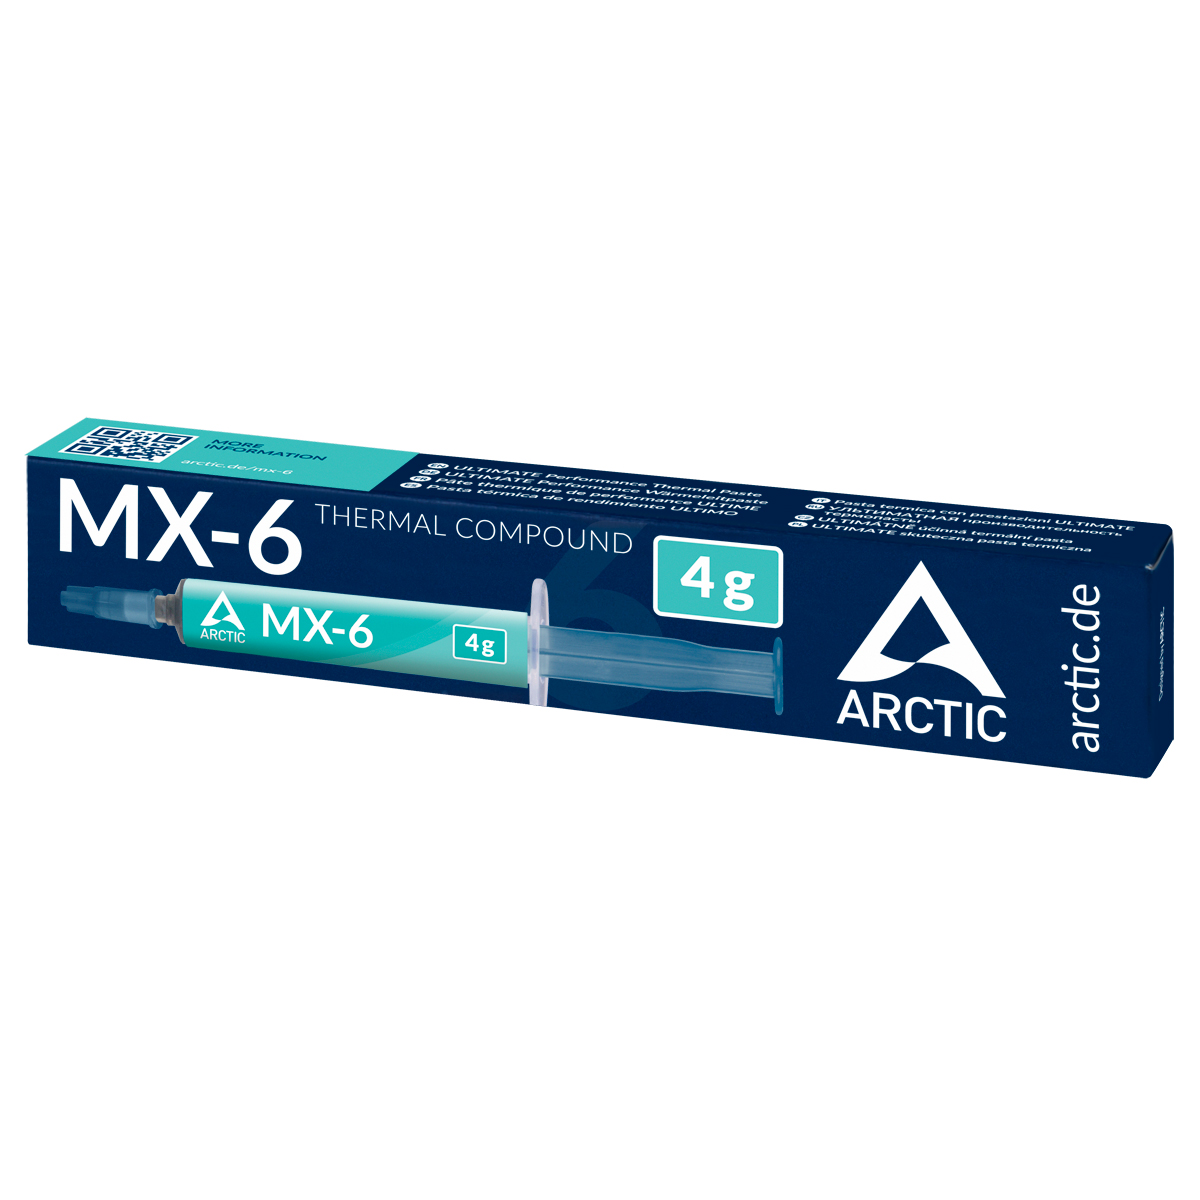 Arctic MX-6 unboxing 